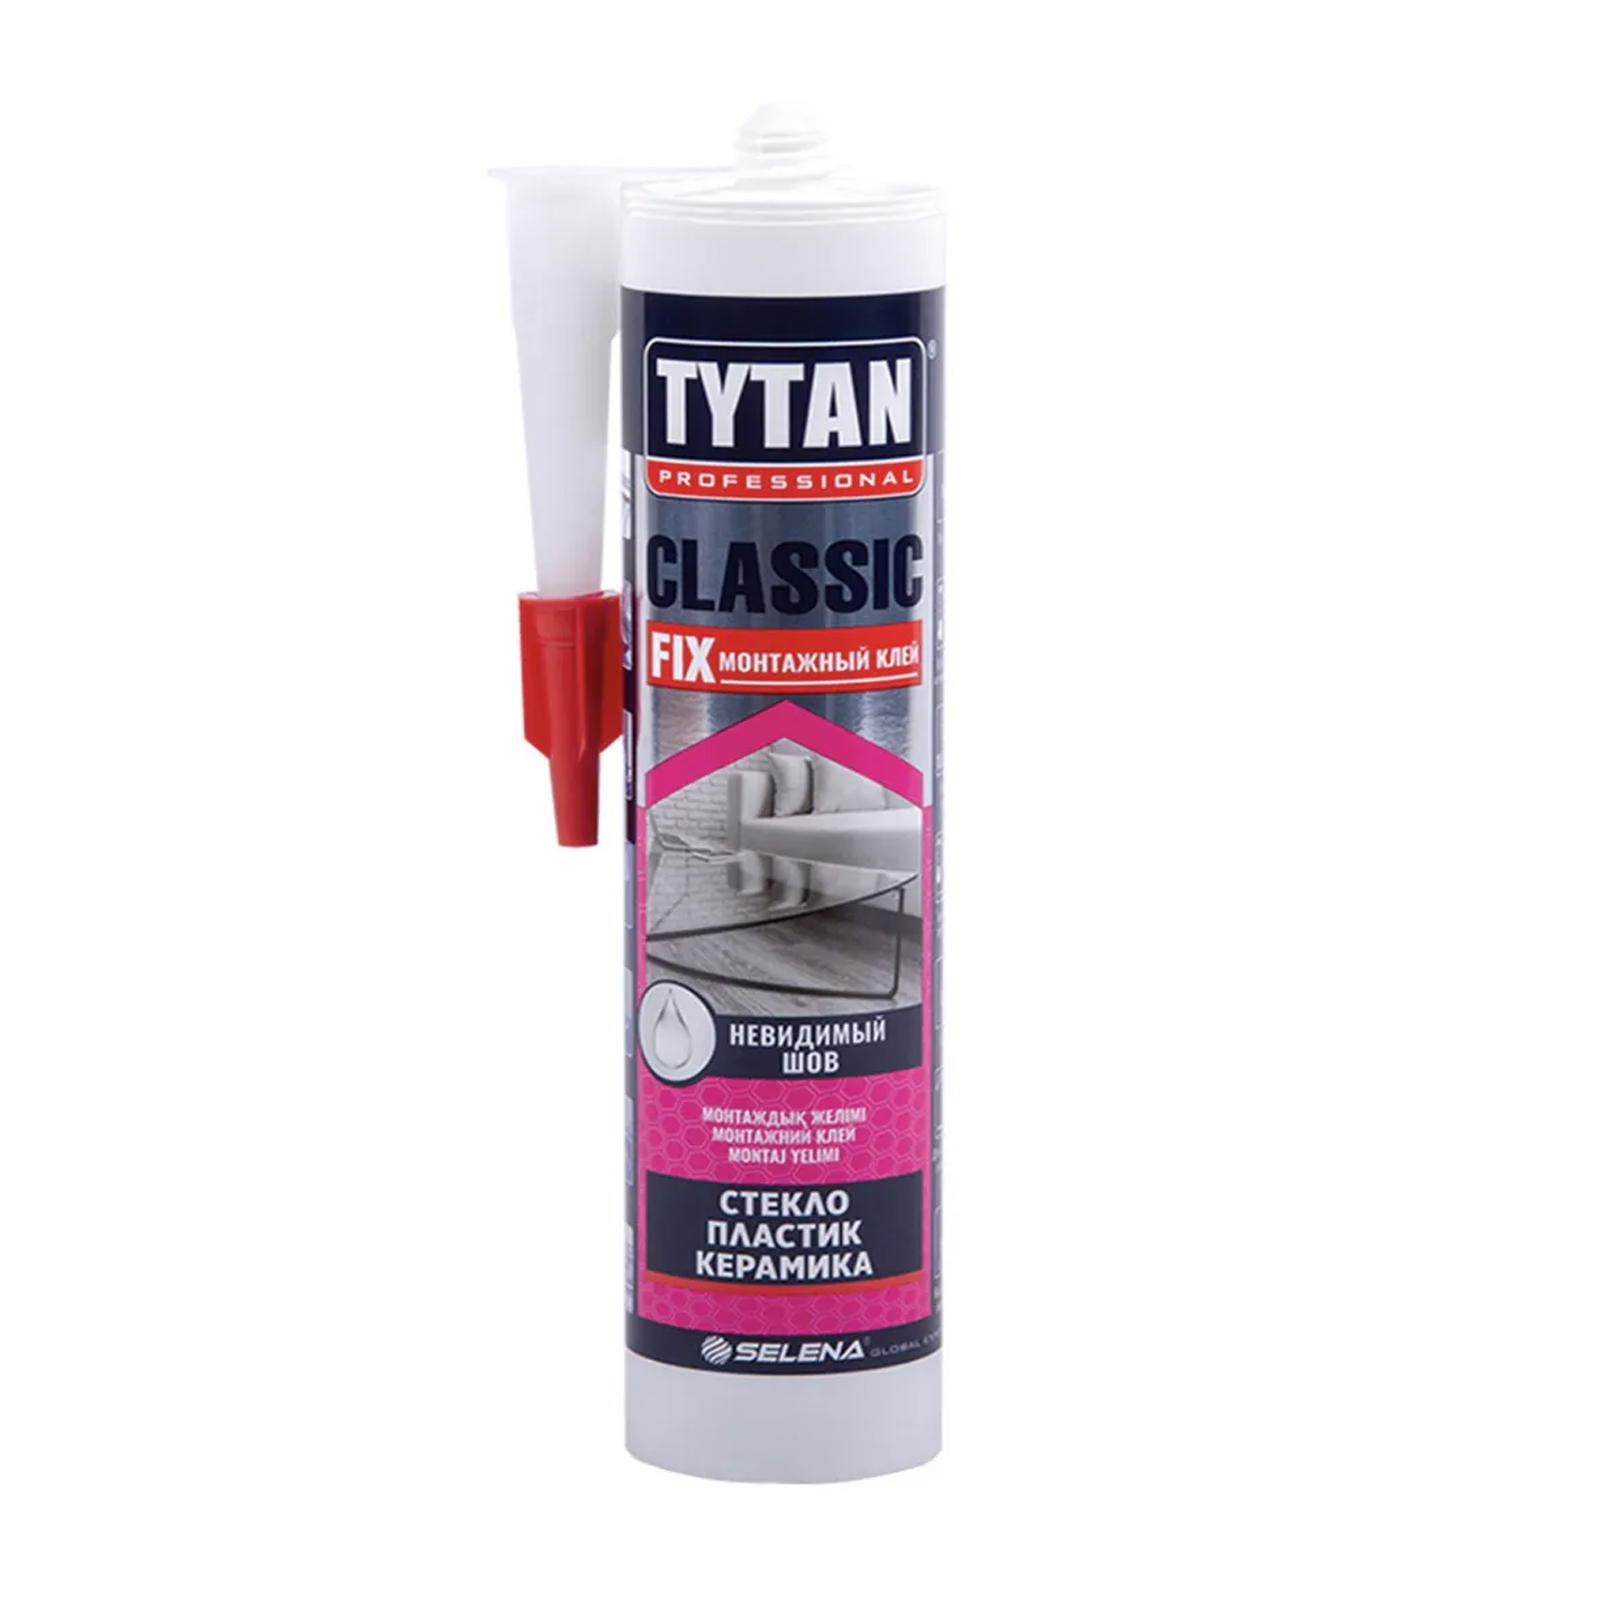 Tytan fix прозрачный. Клей монтажный Tytan Classic Fix 310 мл. Tytan Classic Fix монтажный клей. Жидкие гвозди Титан фикс прозрачный. Клей монтажный каучуковый Tytan Classic Fix прозрачный 310 мл.